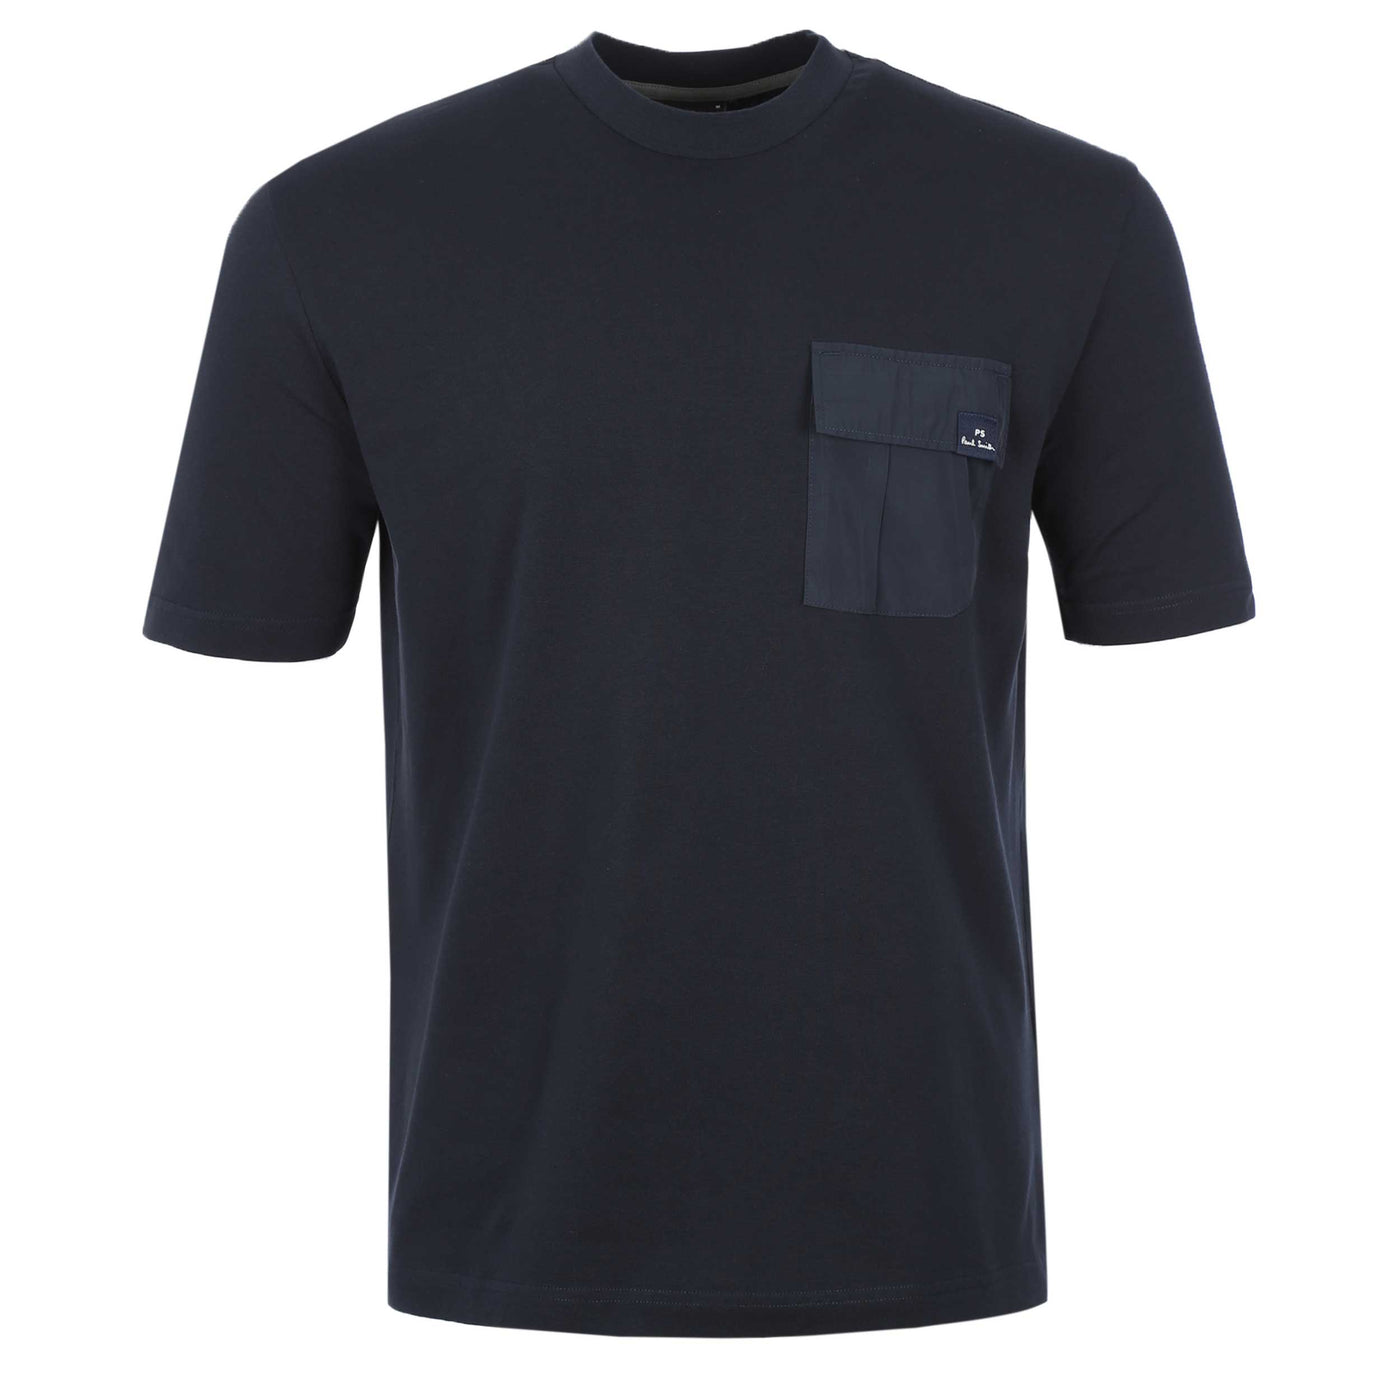 Paul Smith Pocket T Shirt in Navy